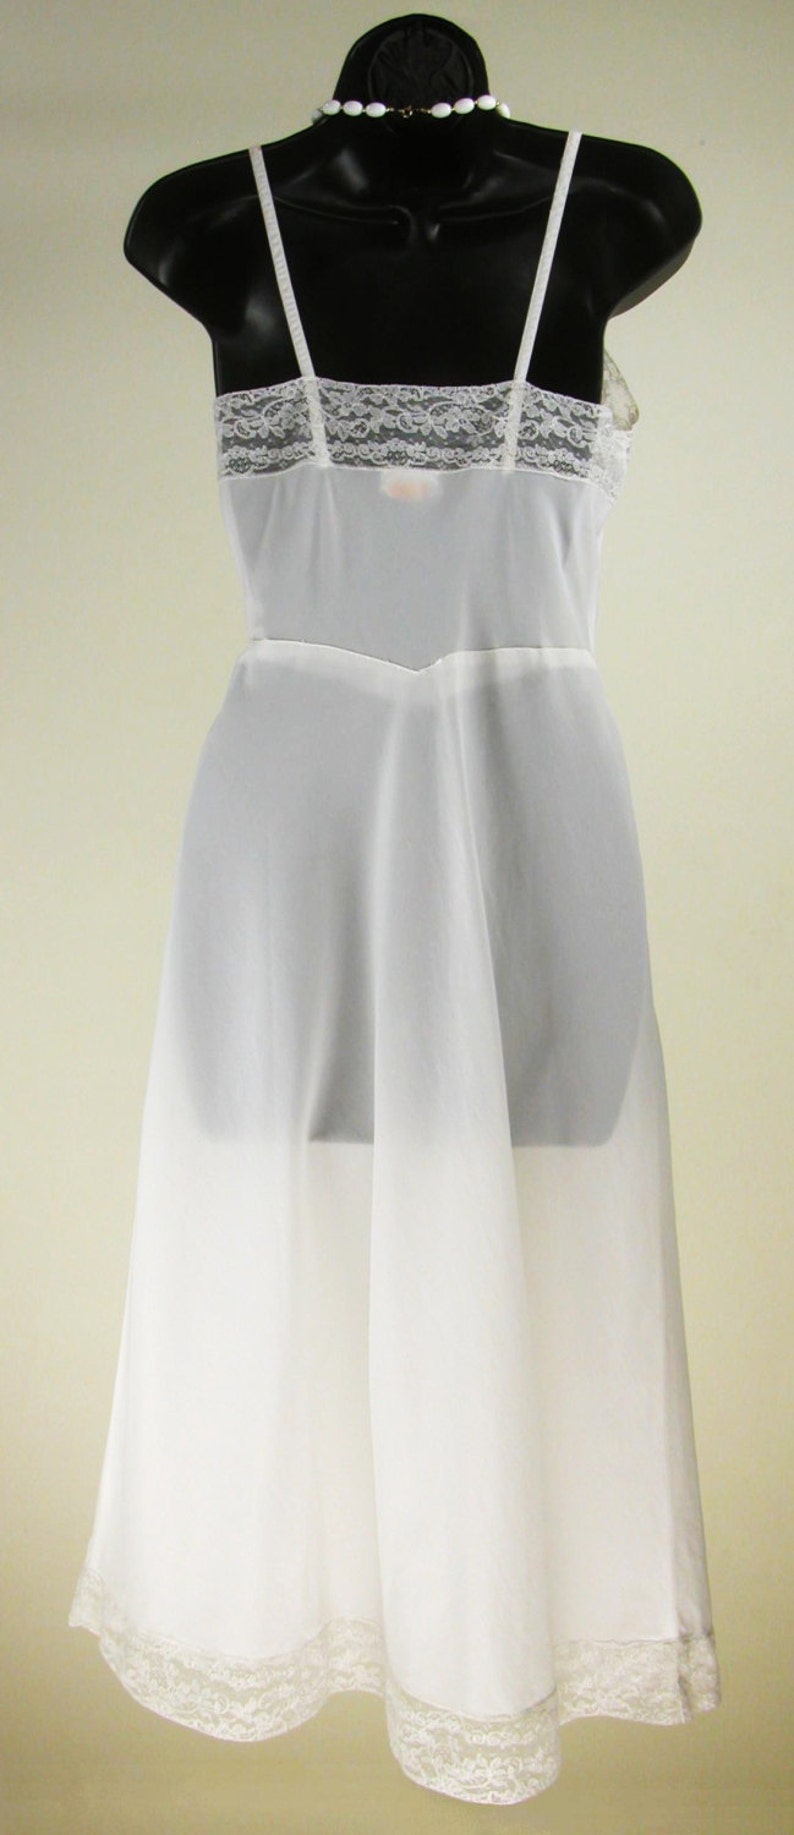 Vintage 1940's 50's FANTASY Full Slip Dress Nightgown Nightie White Chantilly Lace Bias Cut b32 image 3